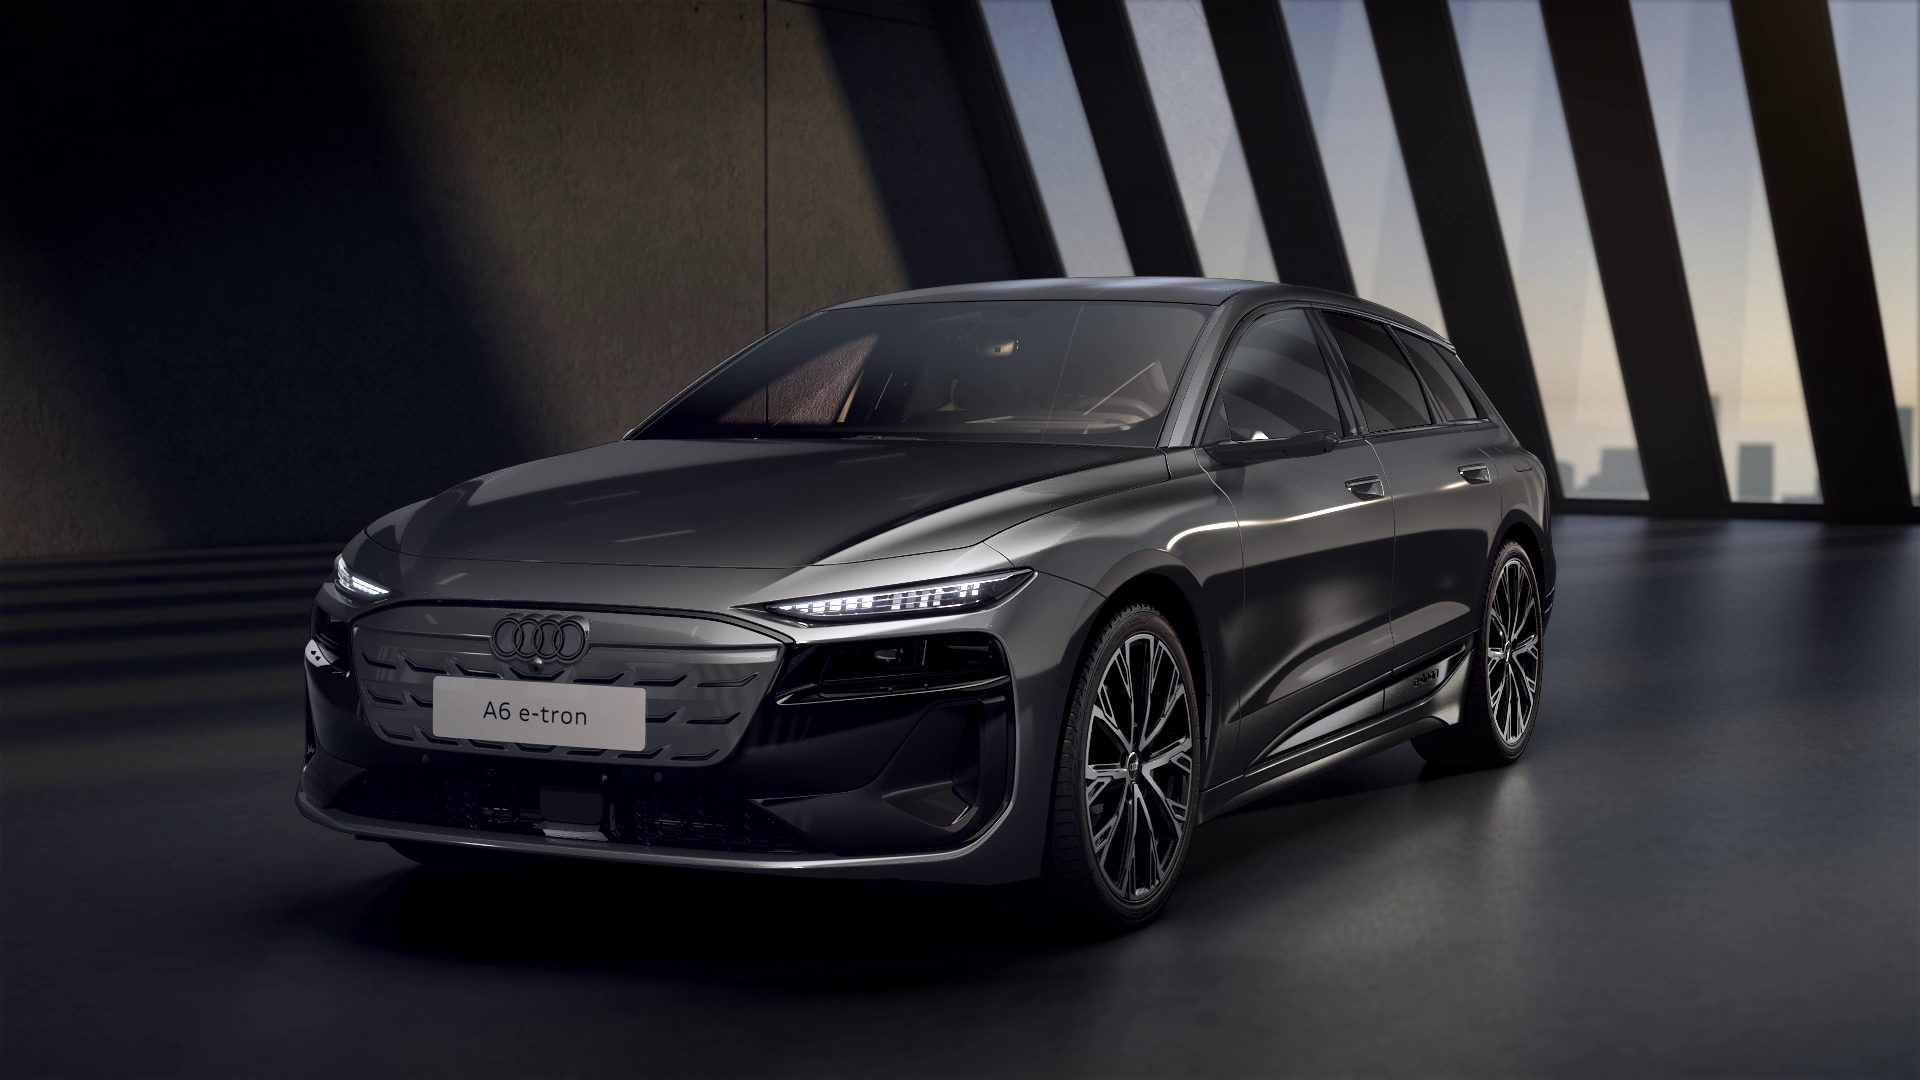 Audi A6 Avant e-tron – Design and lighting technology – Animation